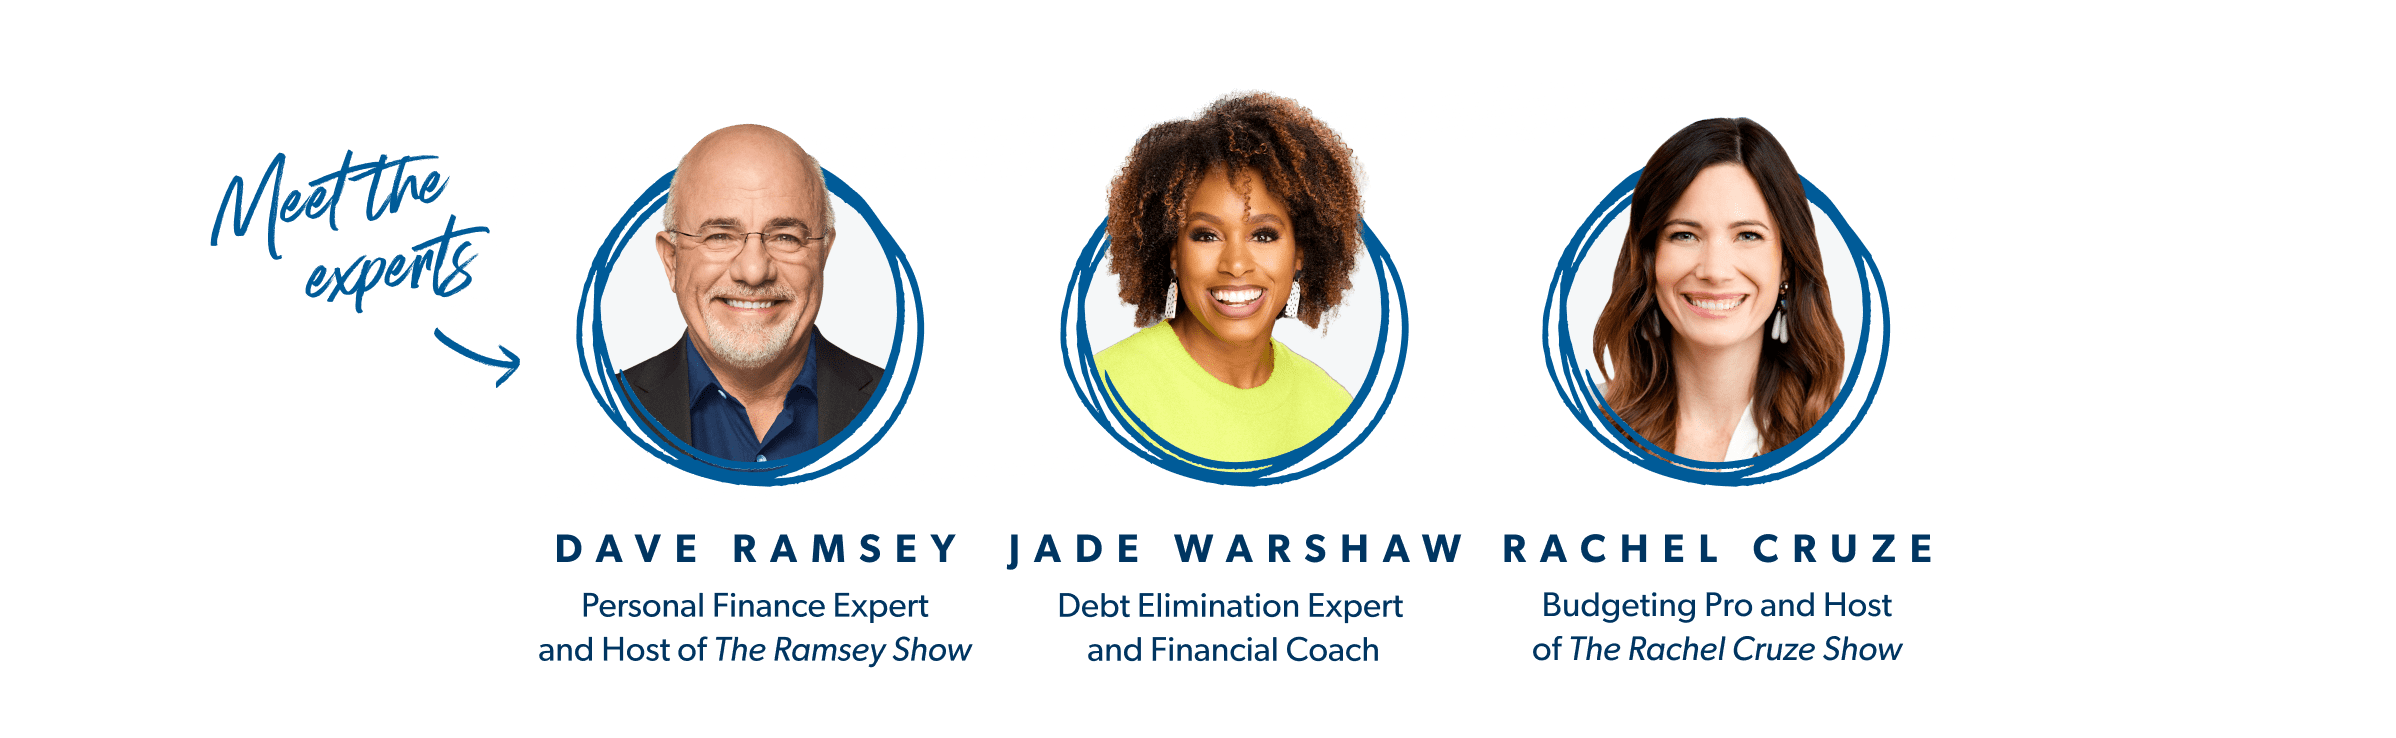 Meet the experts: Dave Ramsey, Jade Warshaw, and Rachel Cruz